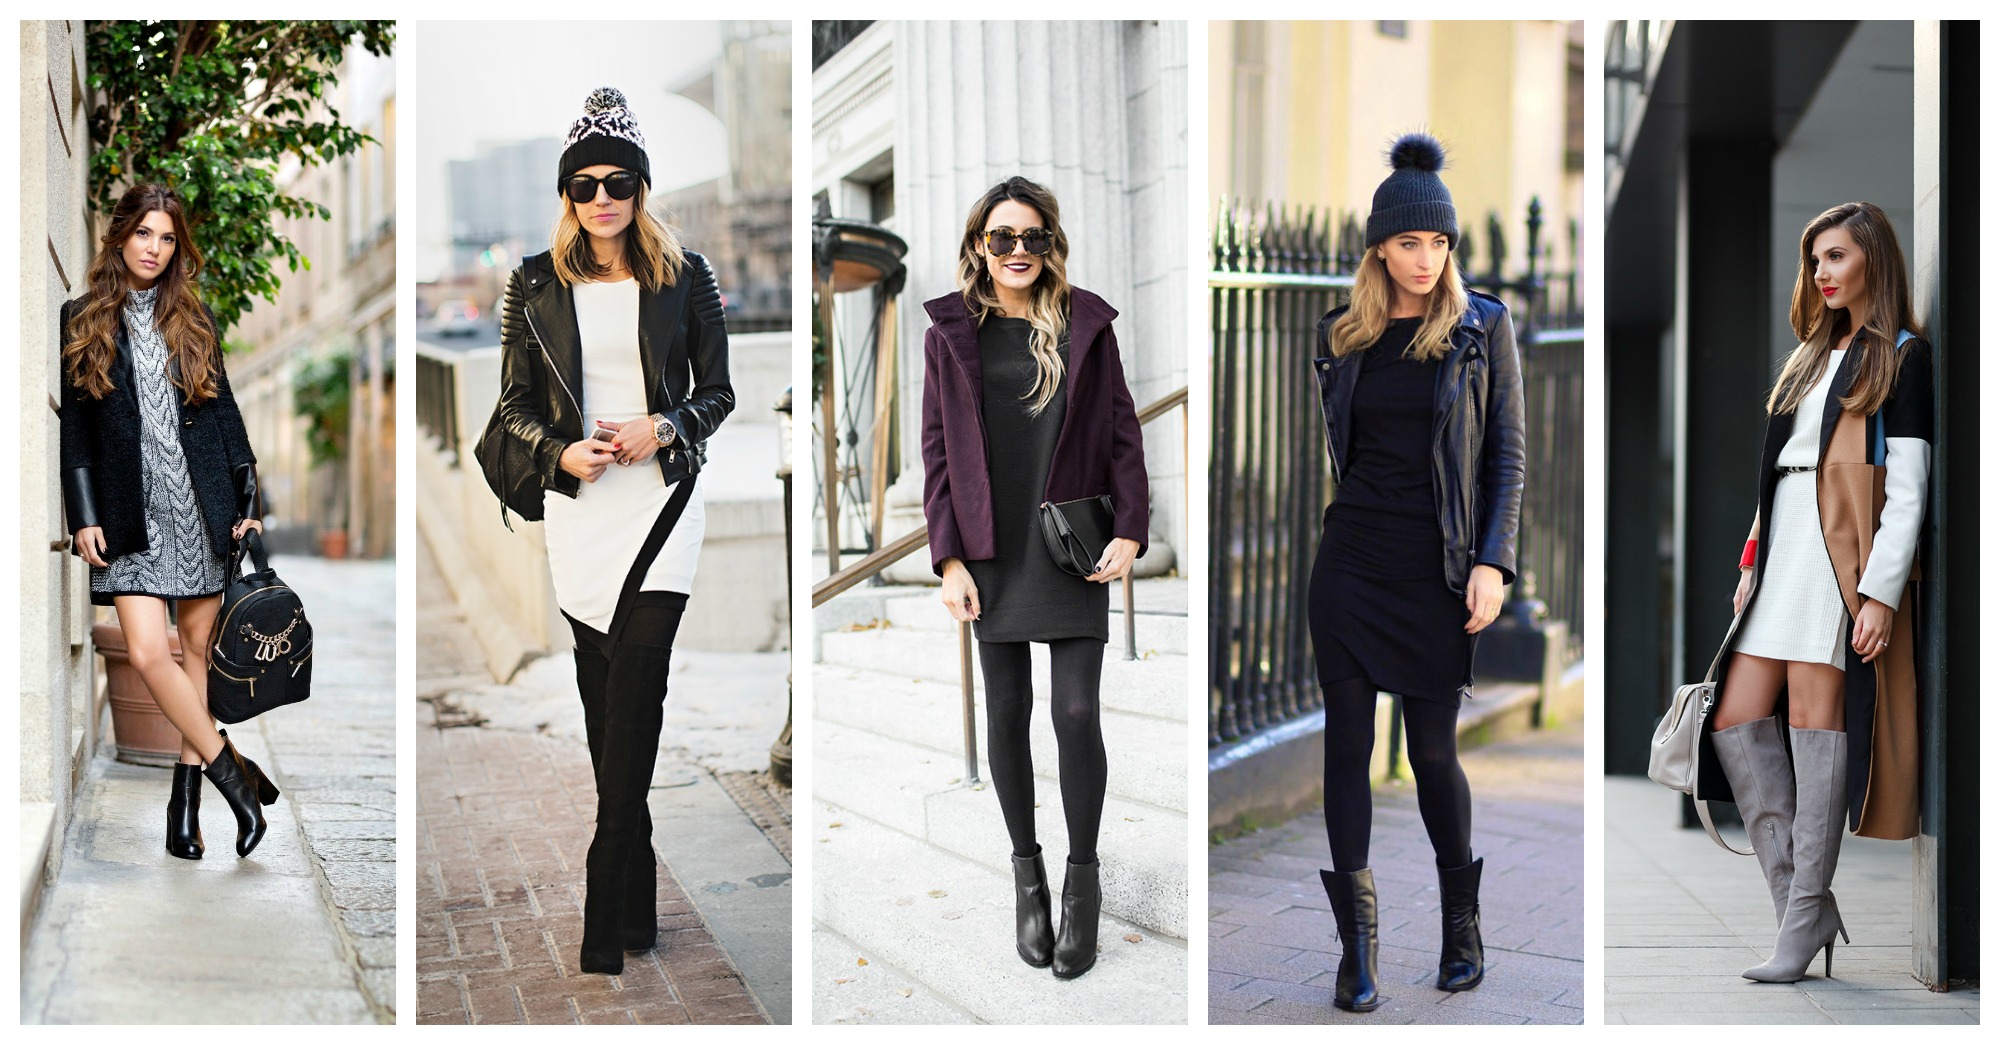 15 Stylish Ways To Wear Winter Dresses - fashionsy.com